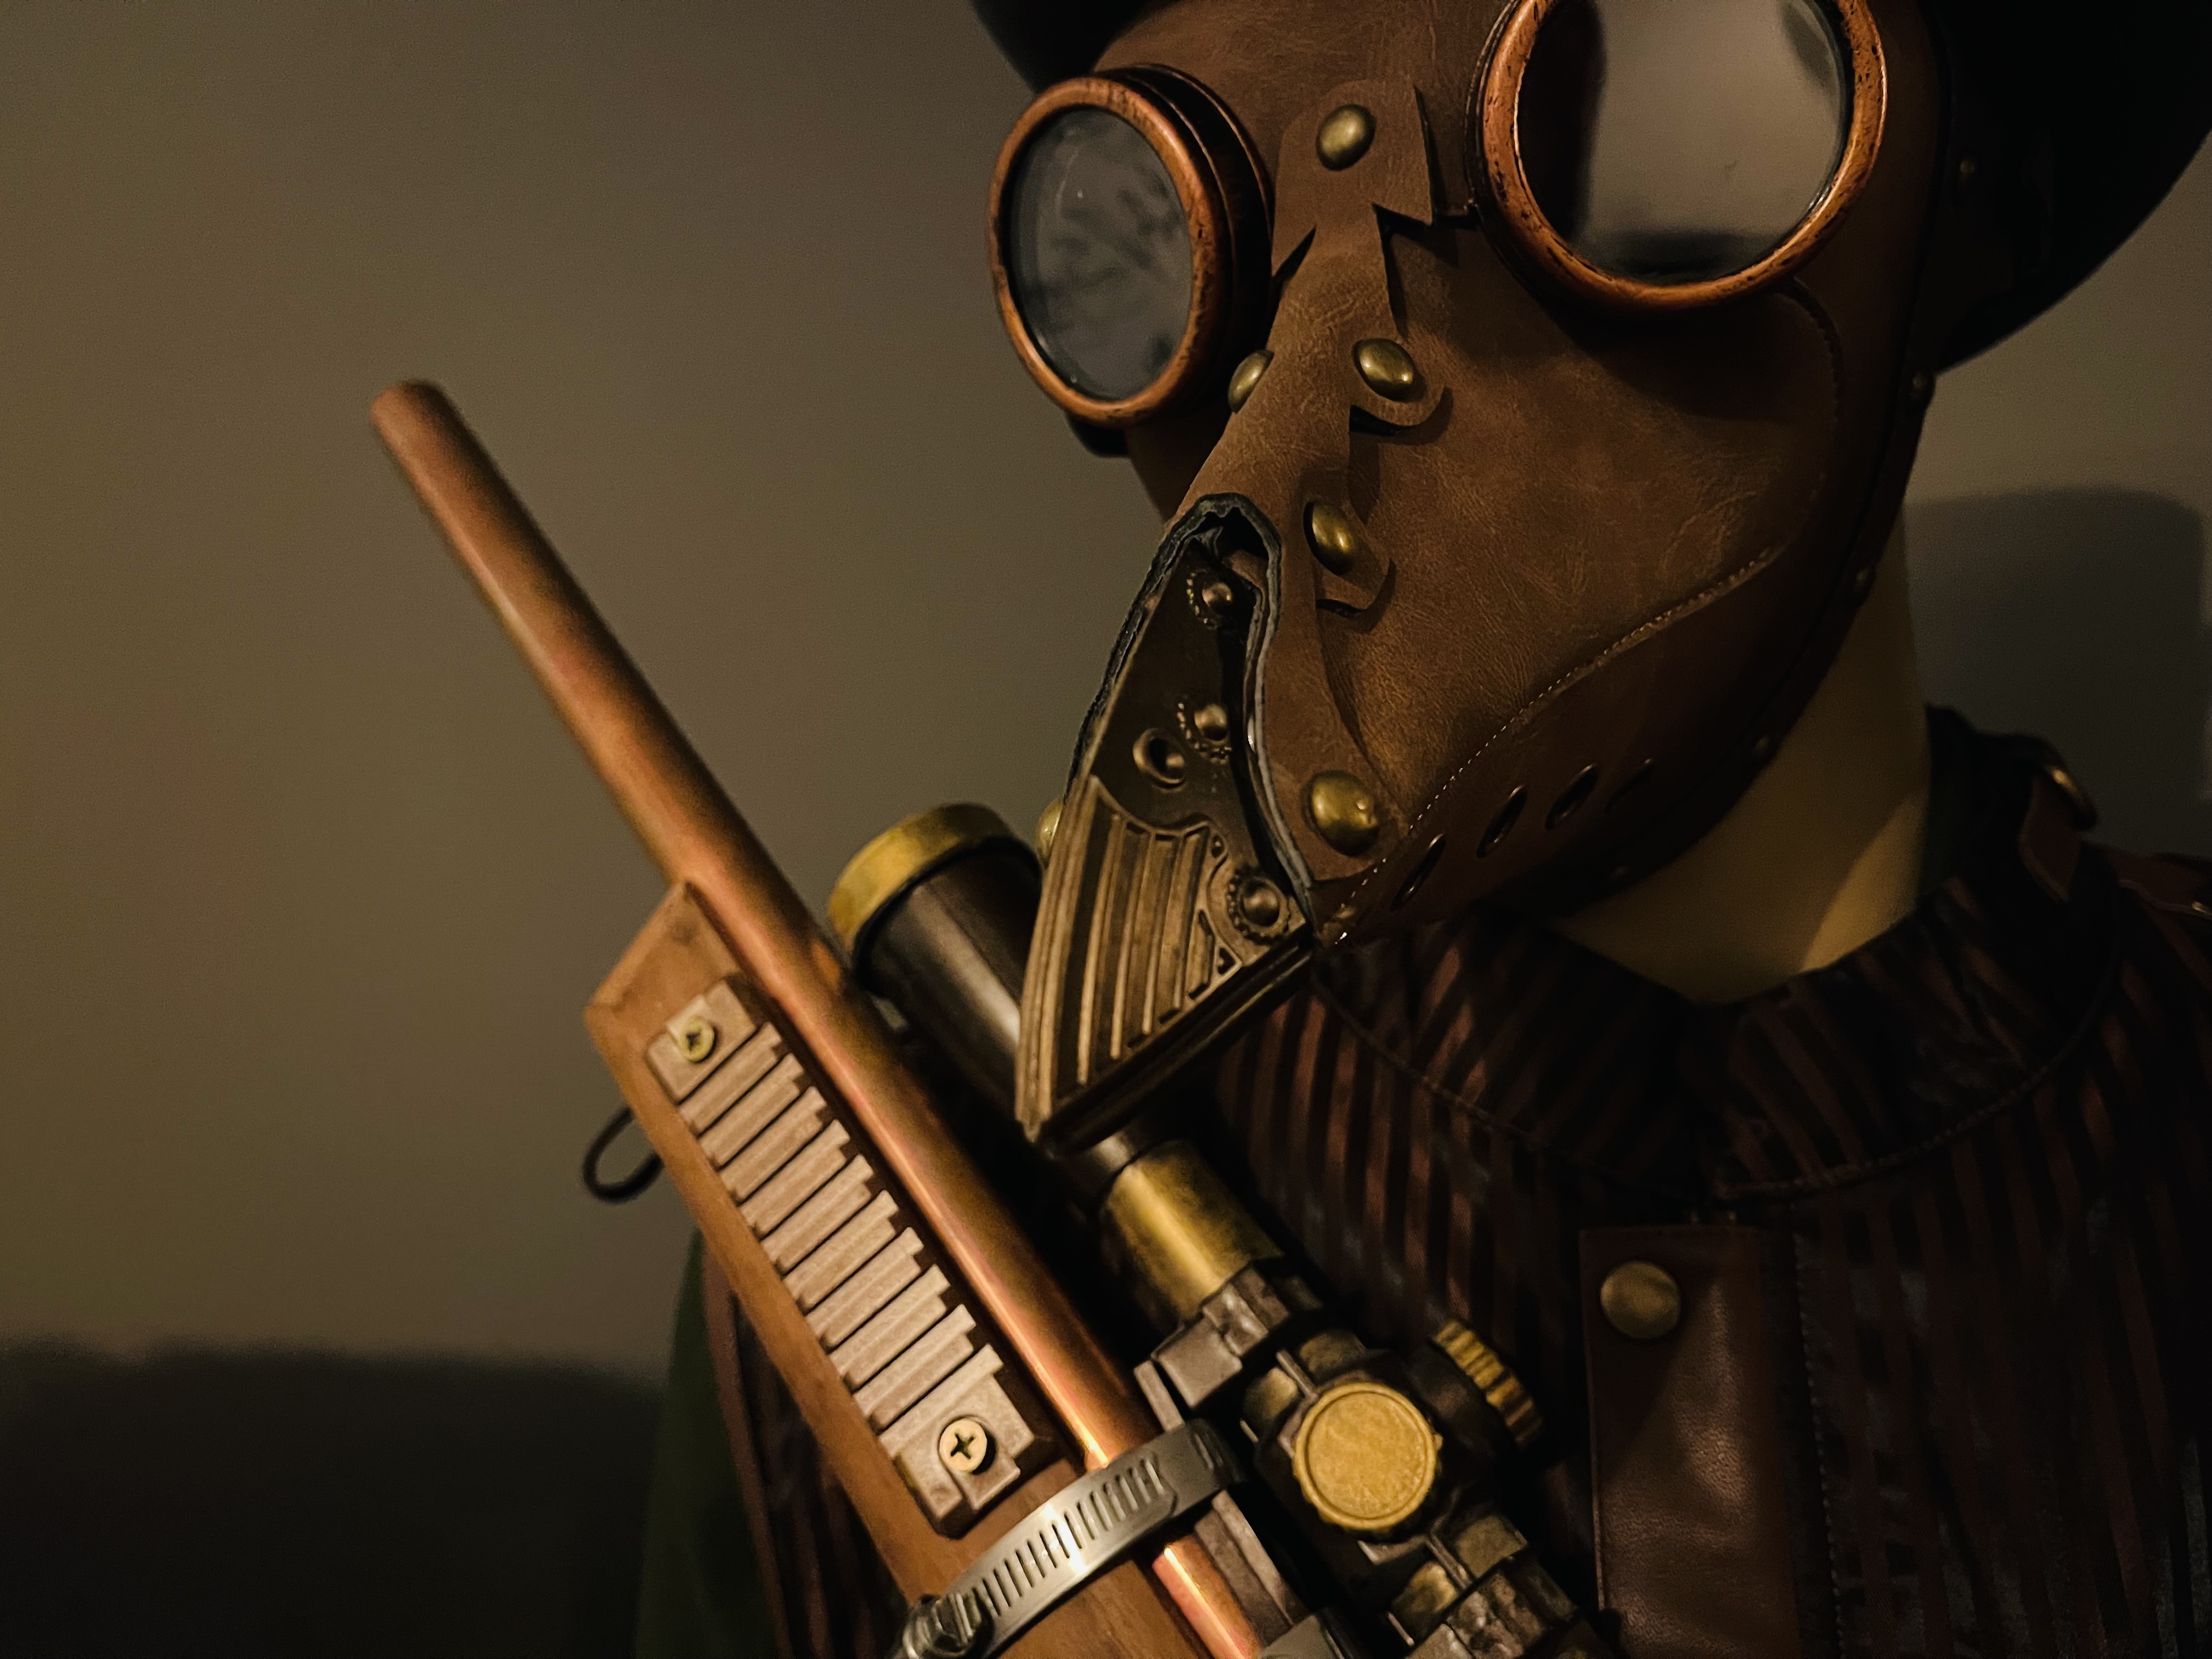 Clockwork Corridor plauge masked figure holding rifle